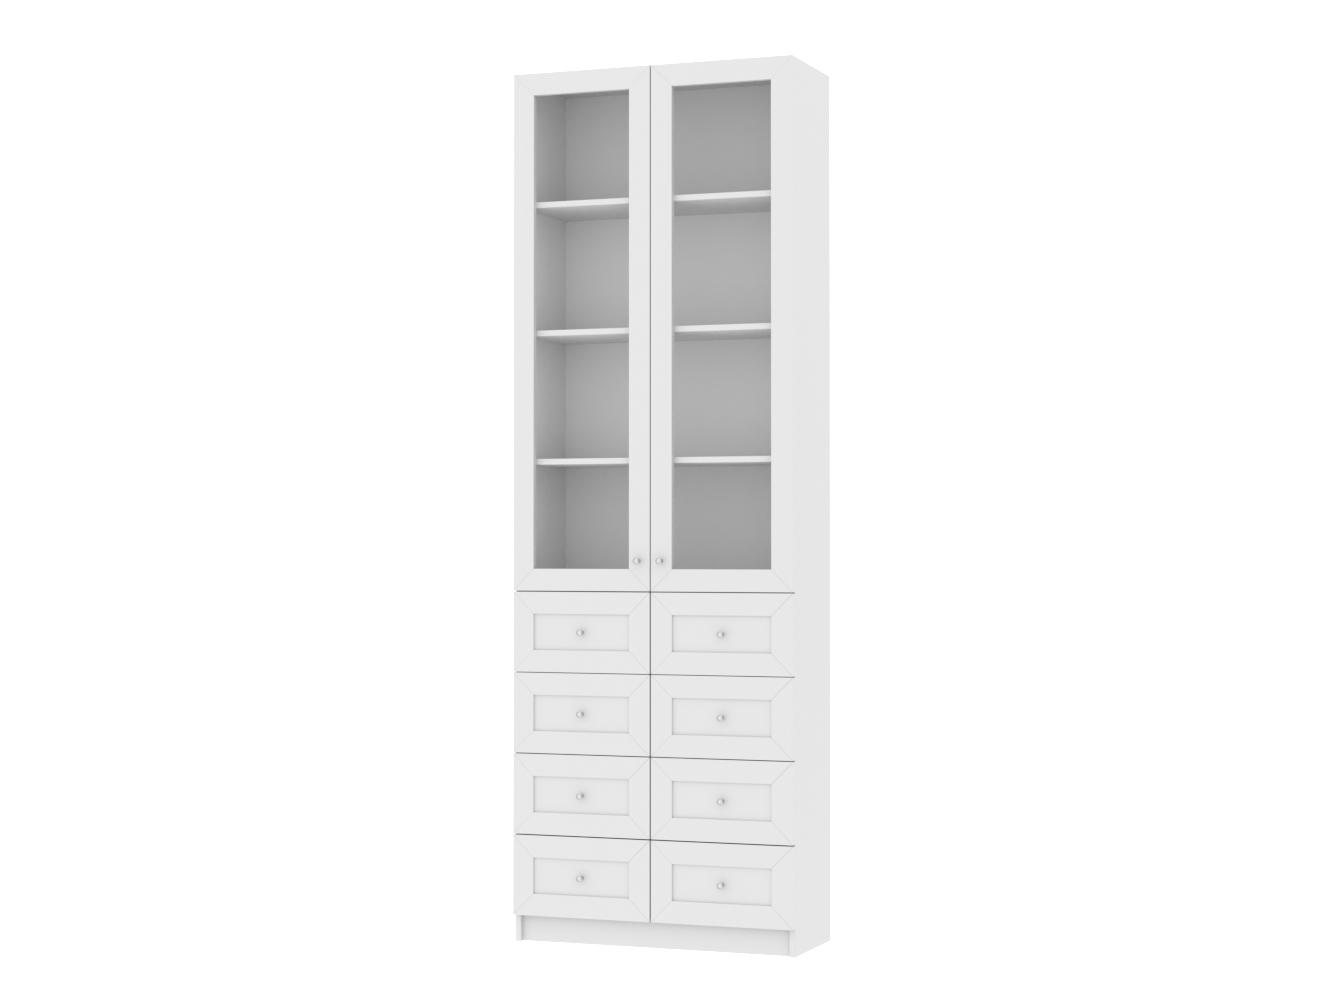  Книжный шкаф Билли 319 white ИКЕА (IKEA) изображение товара